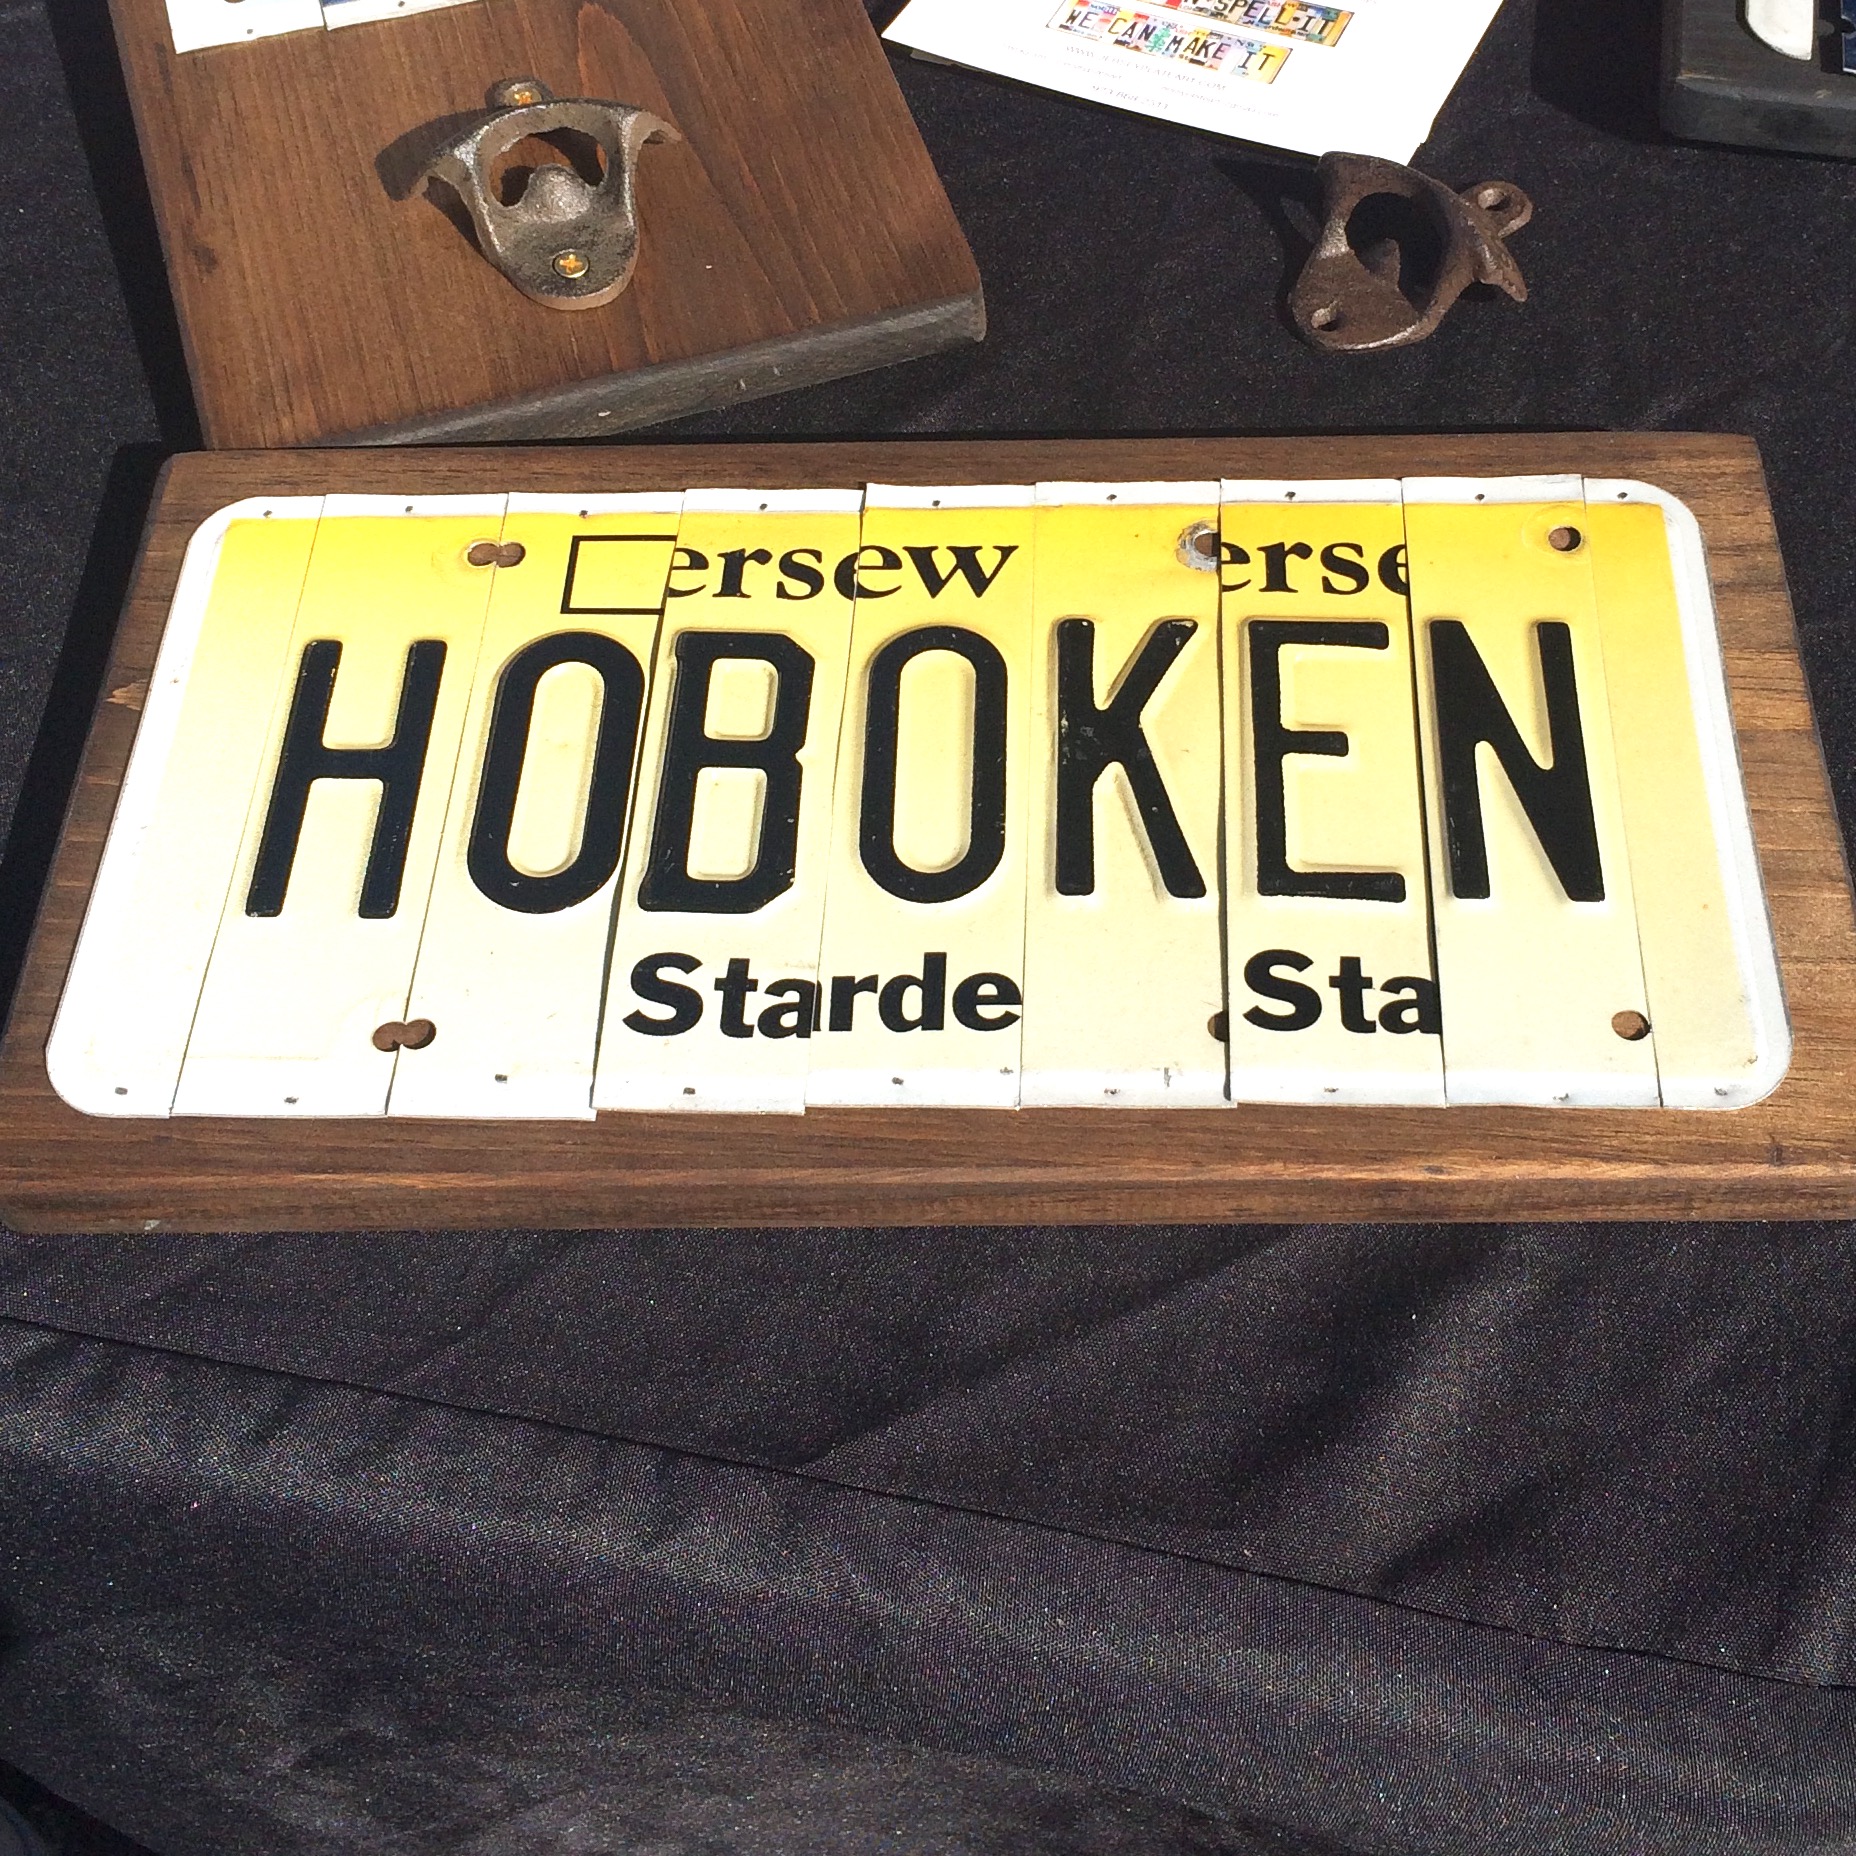 hoboken-girl-jersey-plate-art